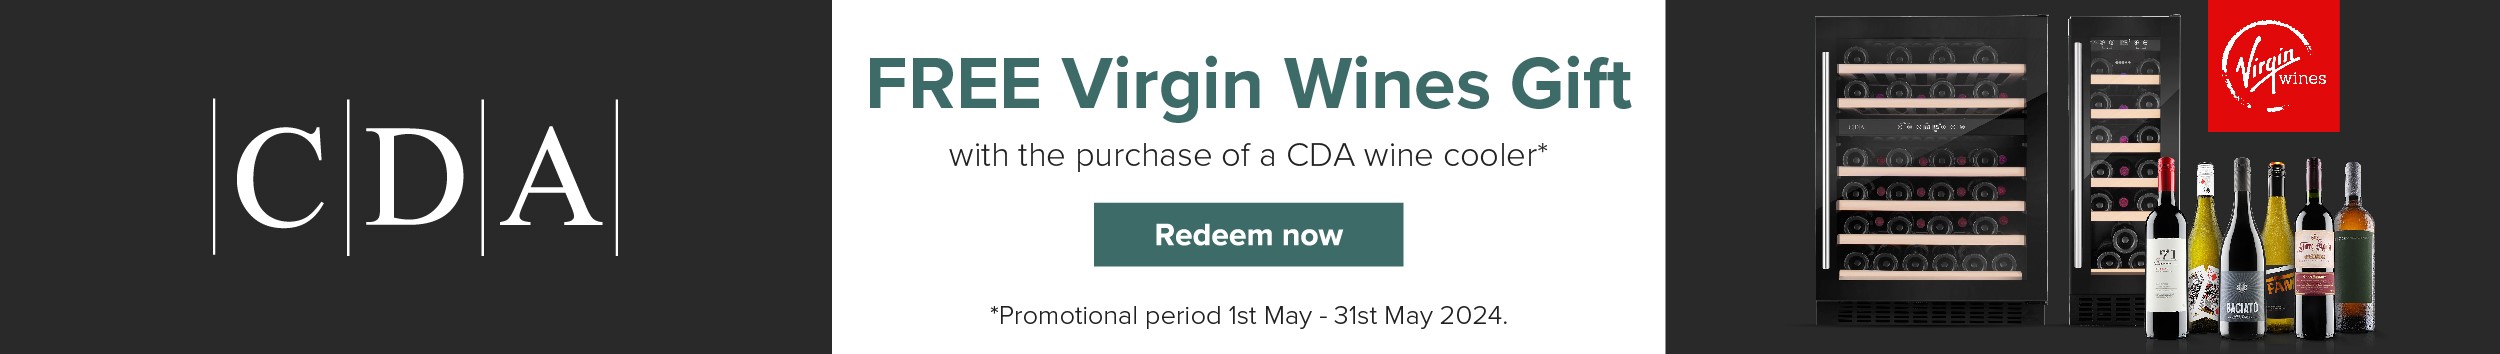 CDA Free Virgin Wine. 